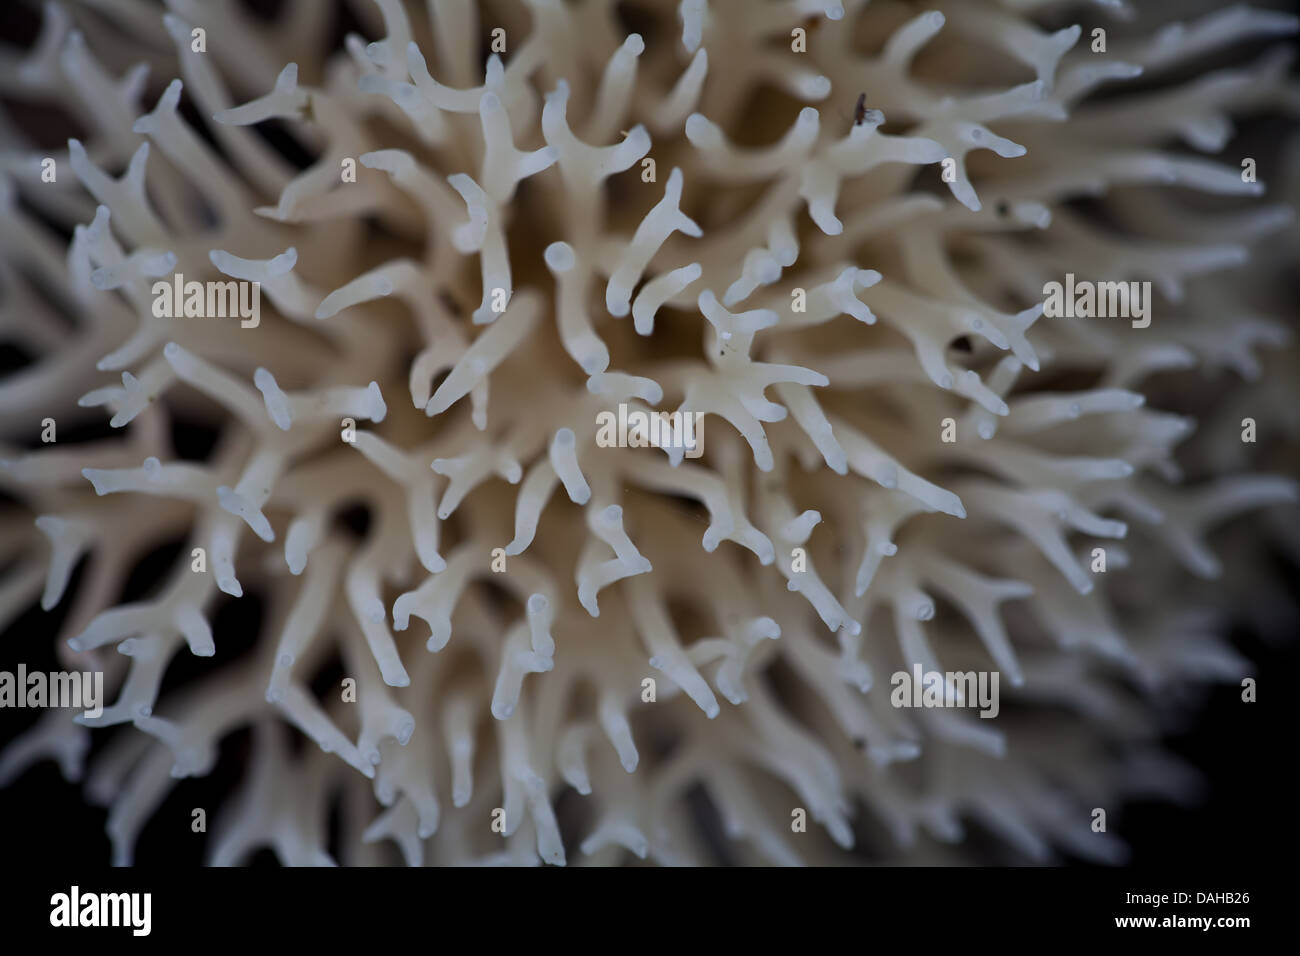 Fungus on the rainforest floor in Altos de Campana National Park, Panama province, Republic of Panama. Stock Photo